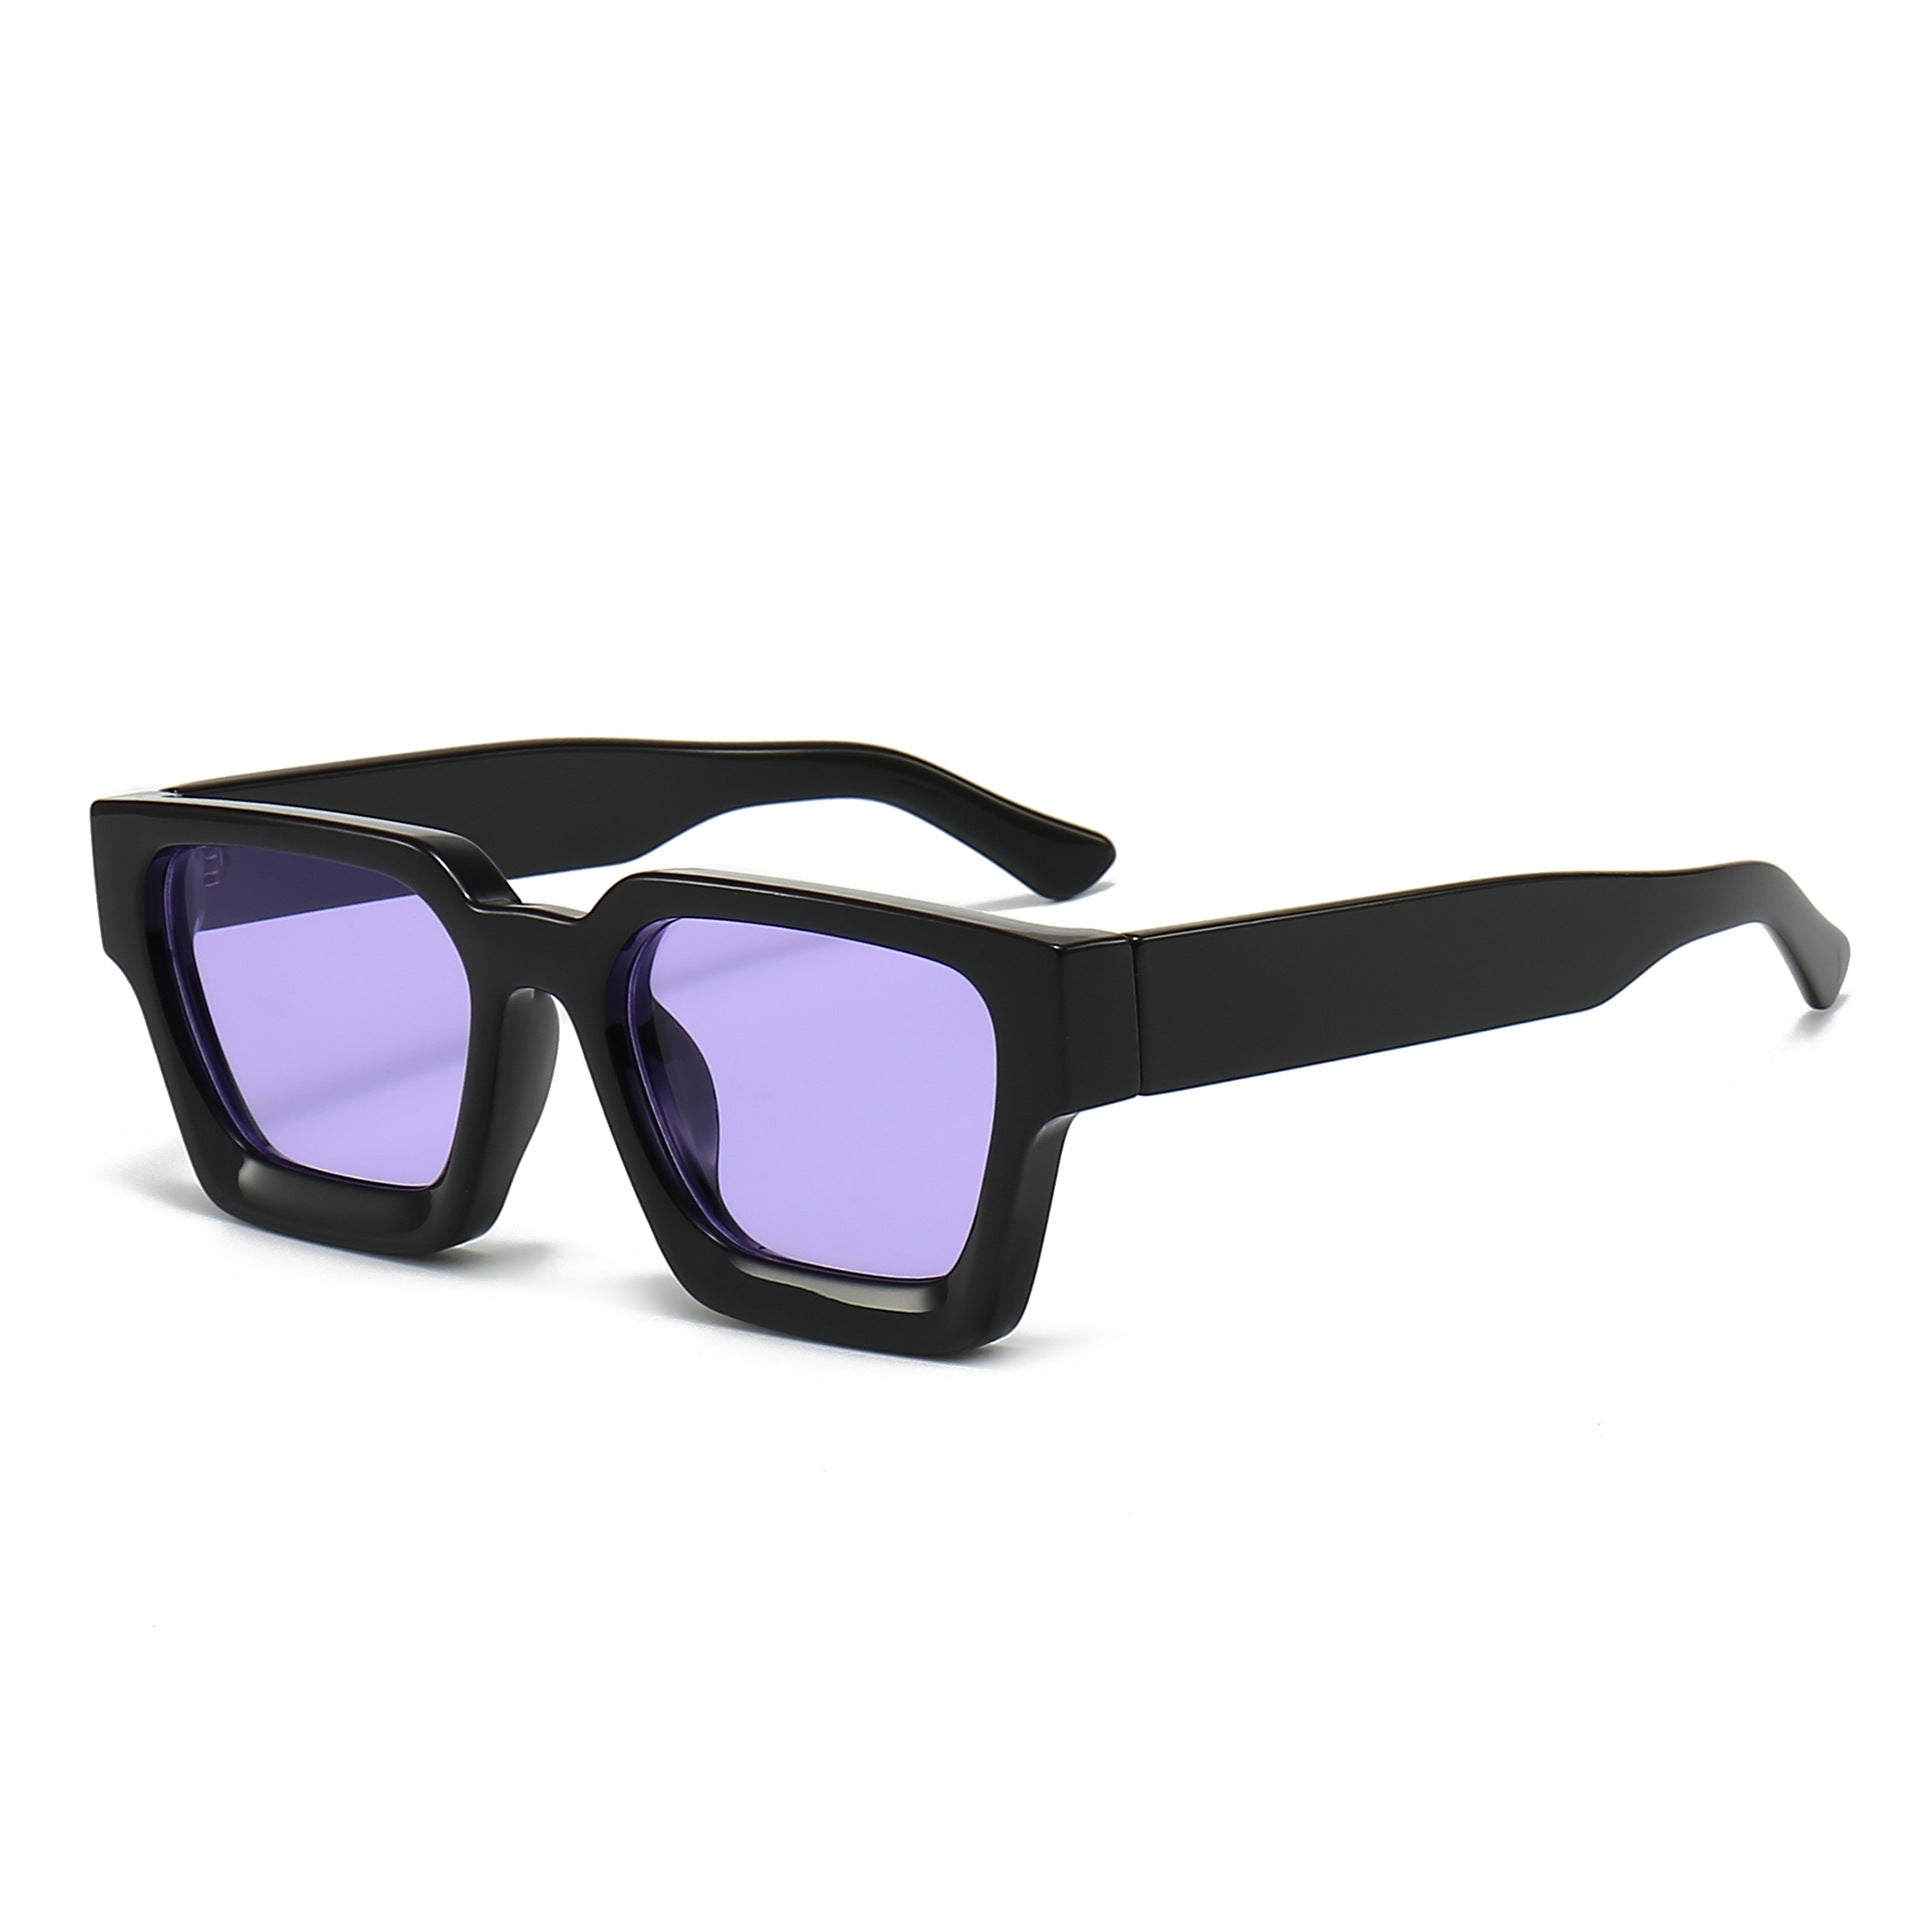 Thick Framed Sunglasses